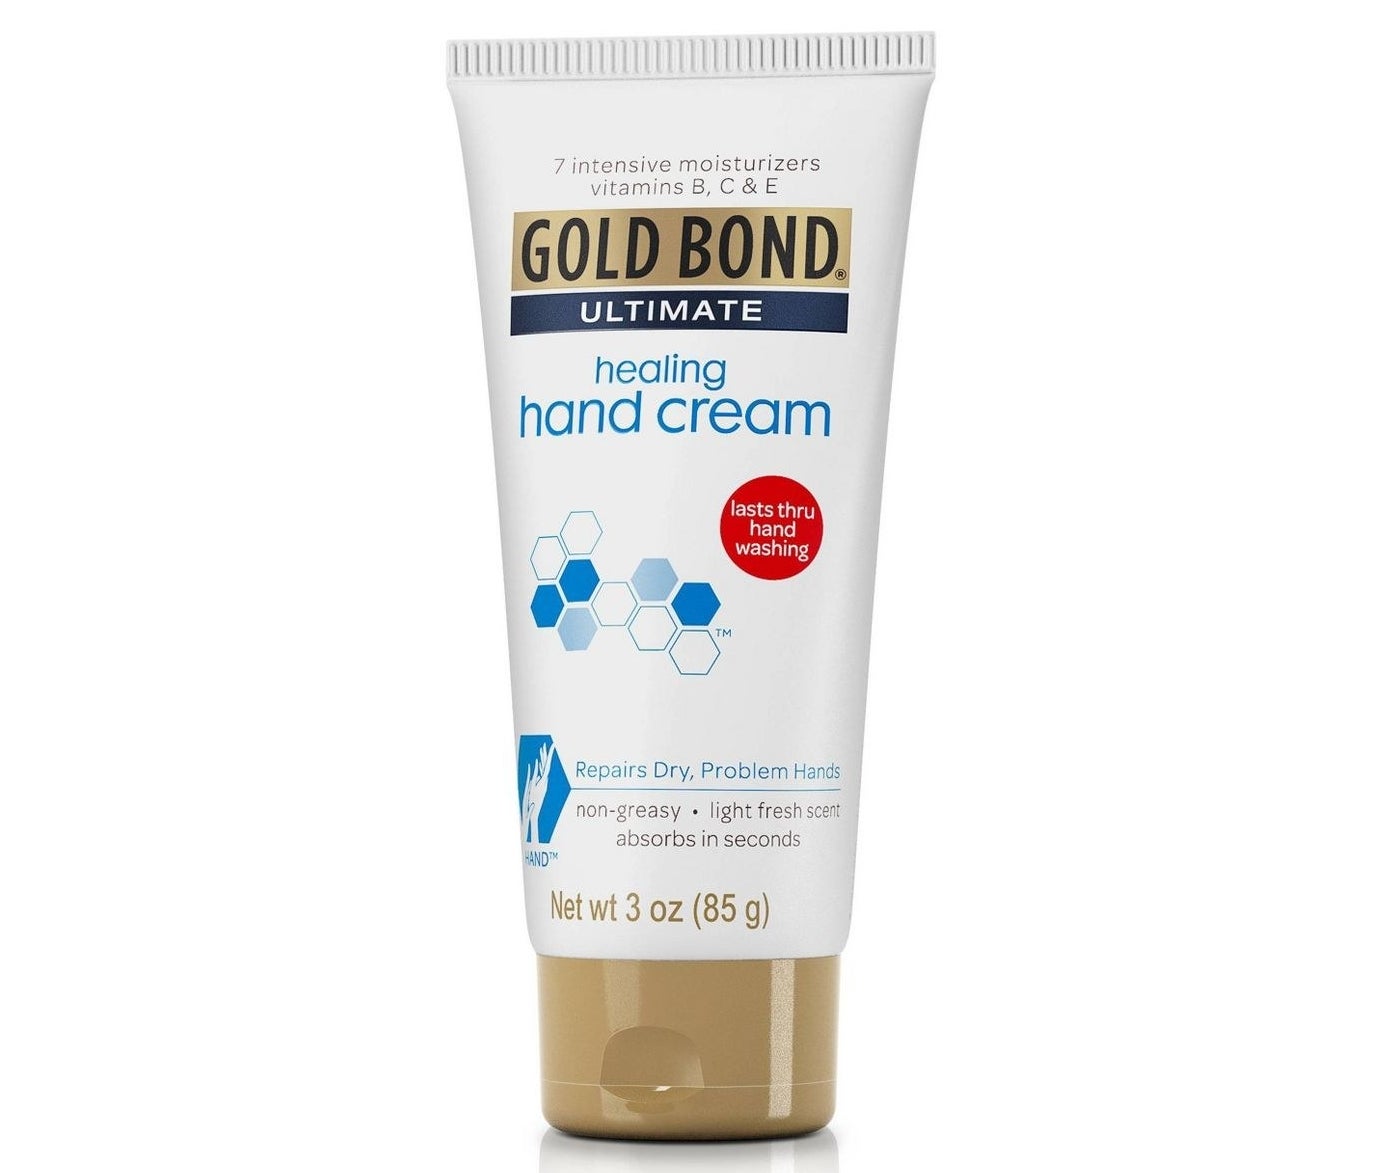 The Gold Bond healing hand cream